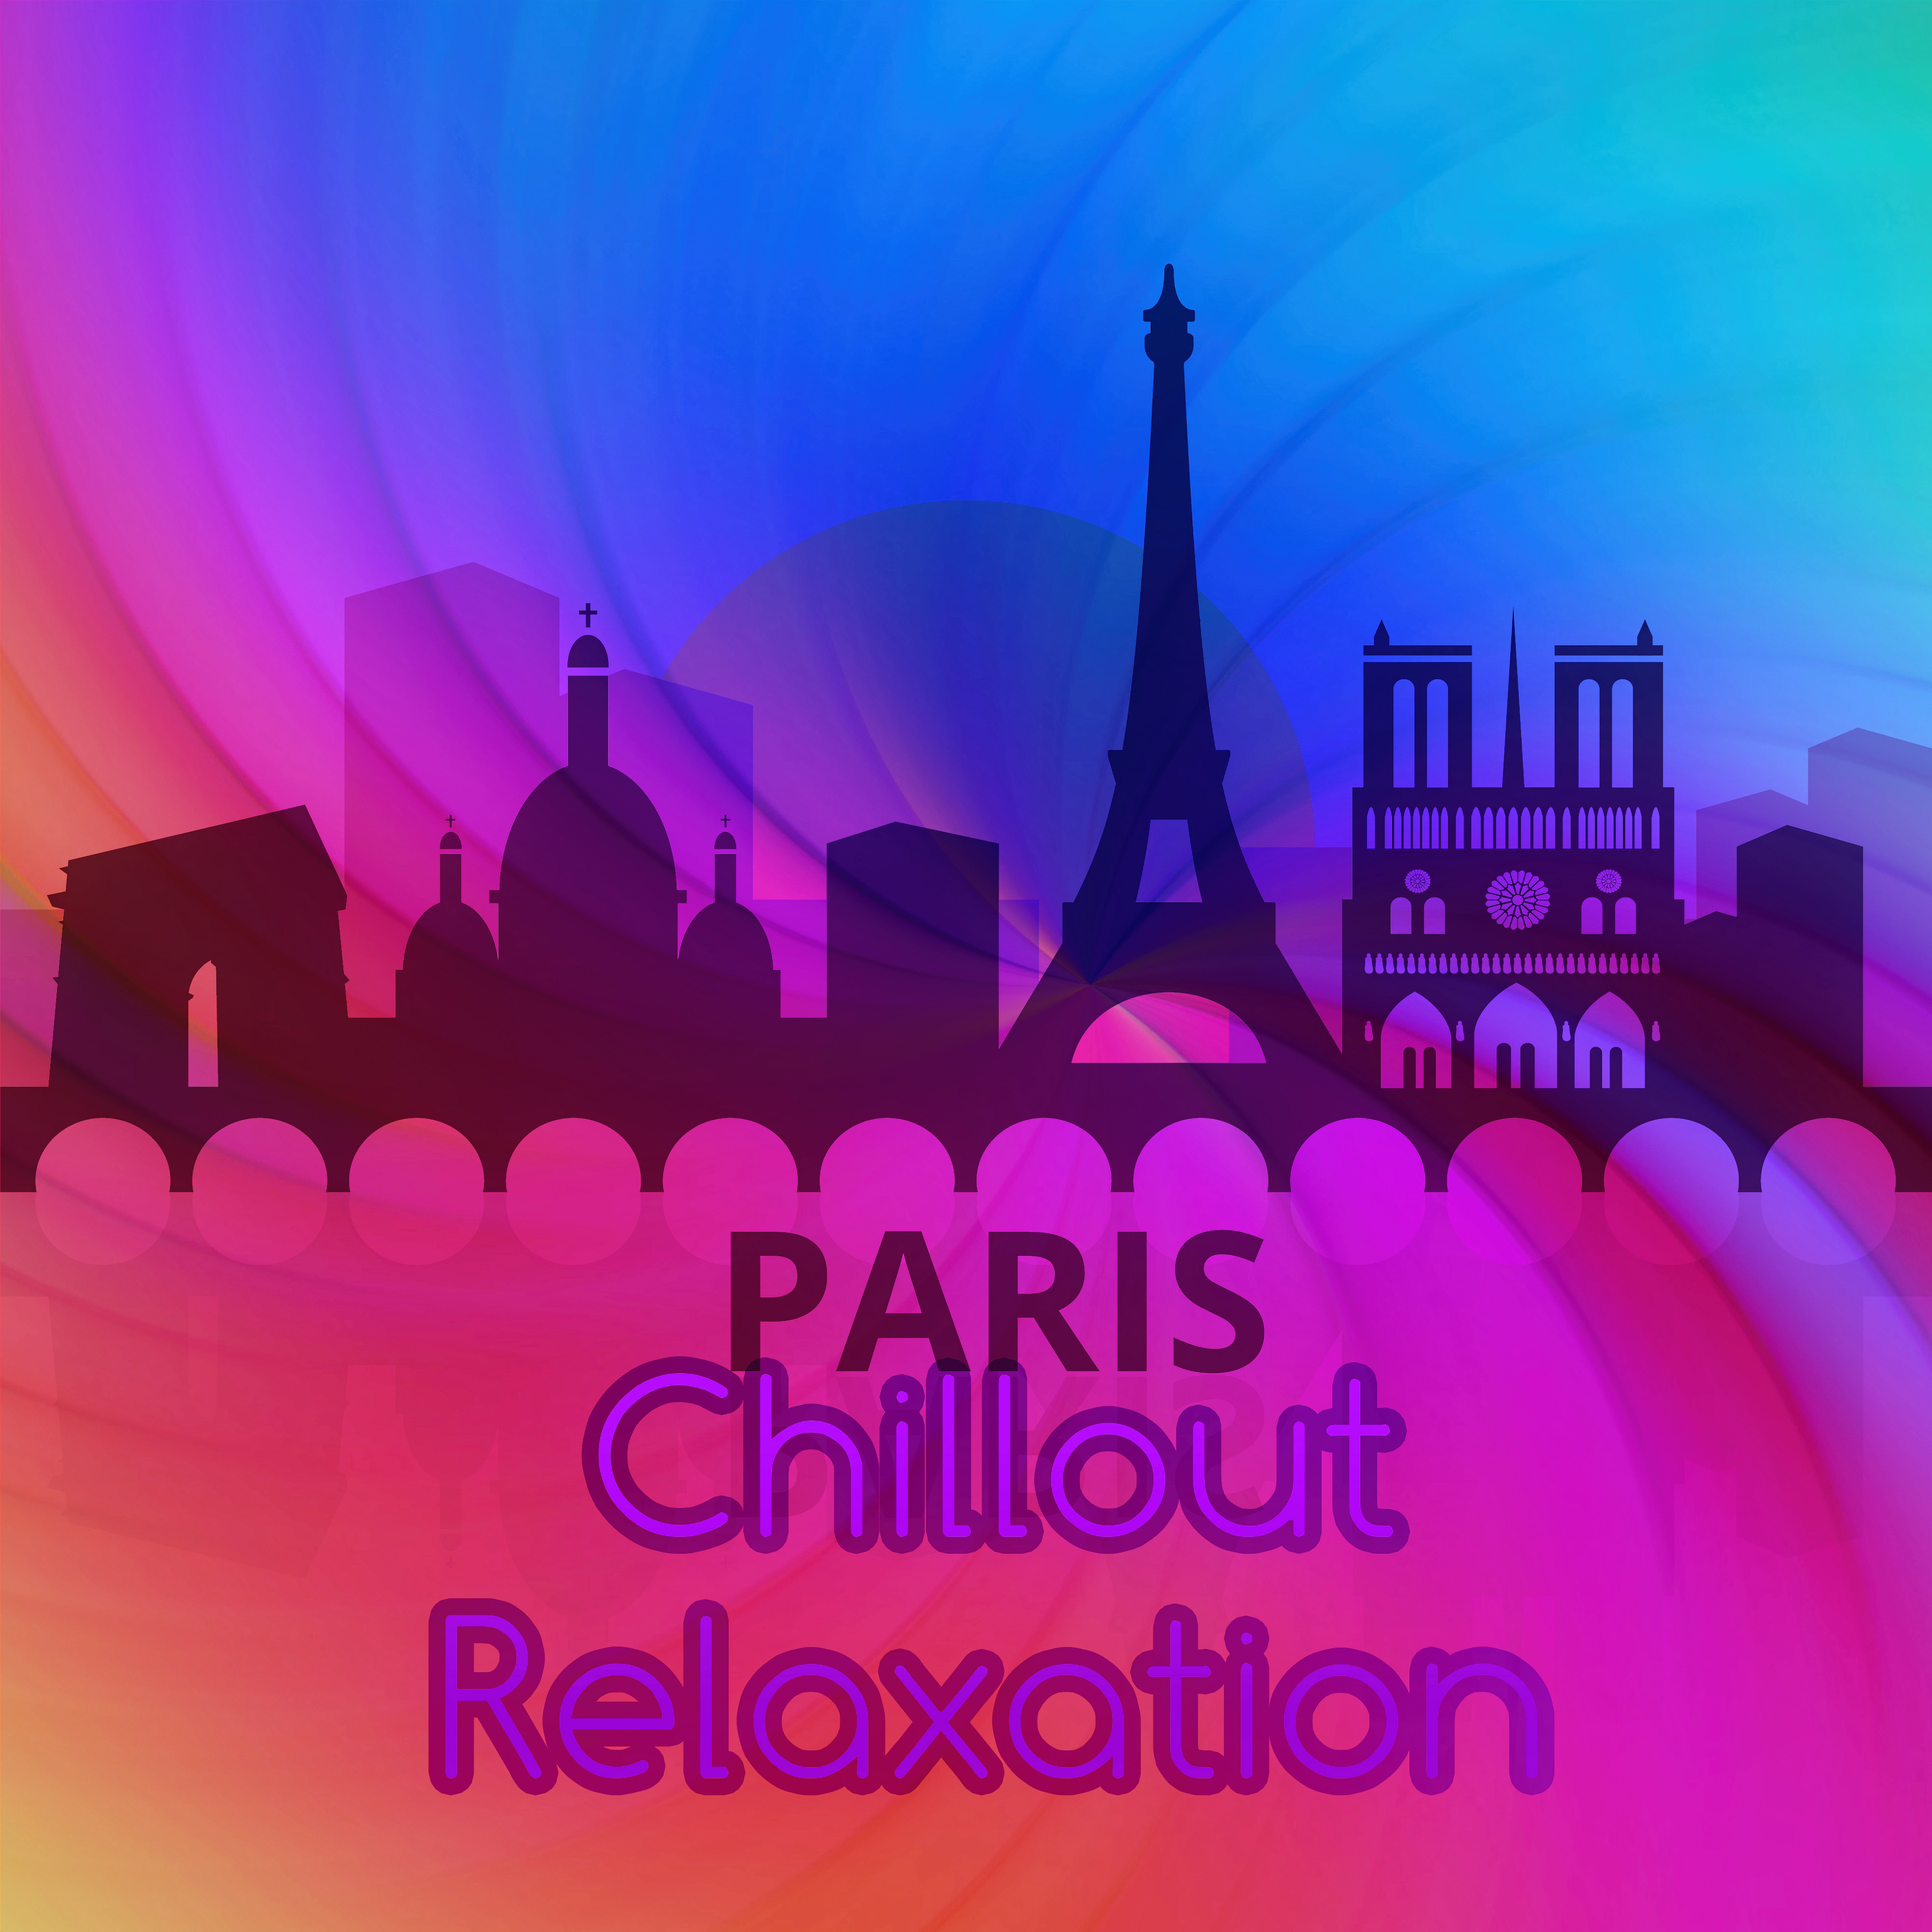 Paris Chillout Relaxation – Vital Energy, Positive Vibration, Break, Restful, Calming Music, Regeneration